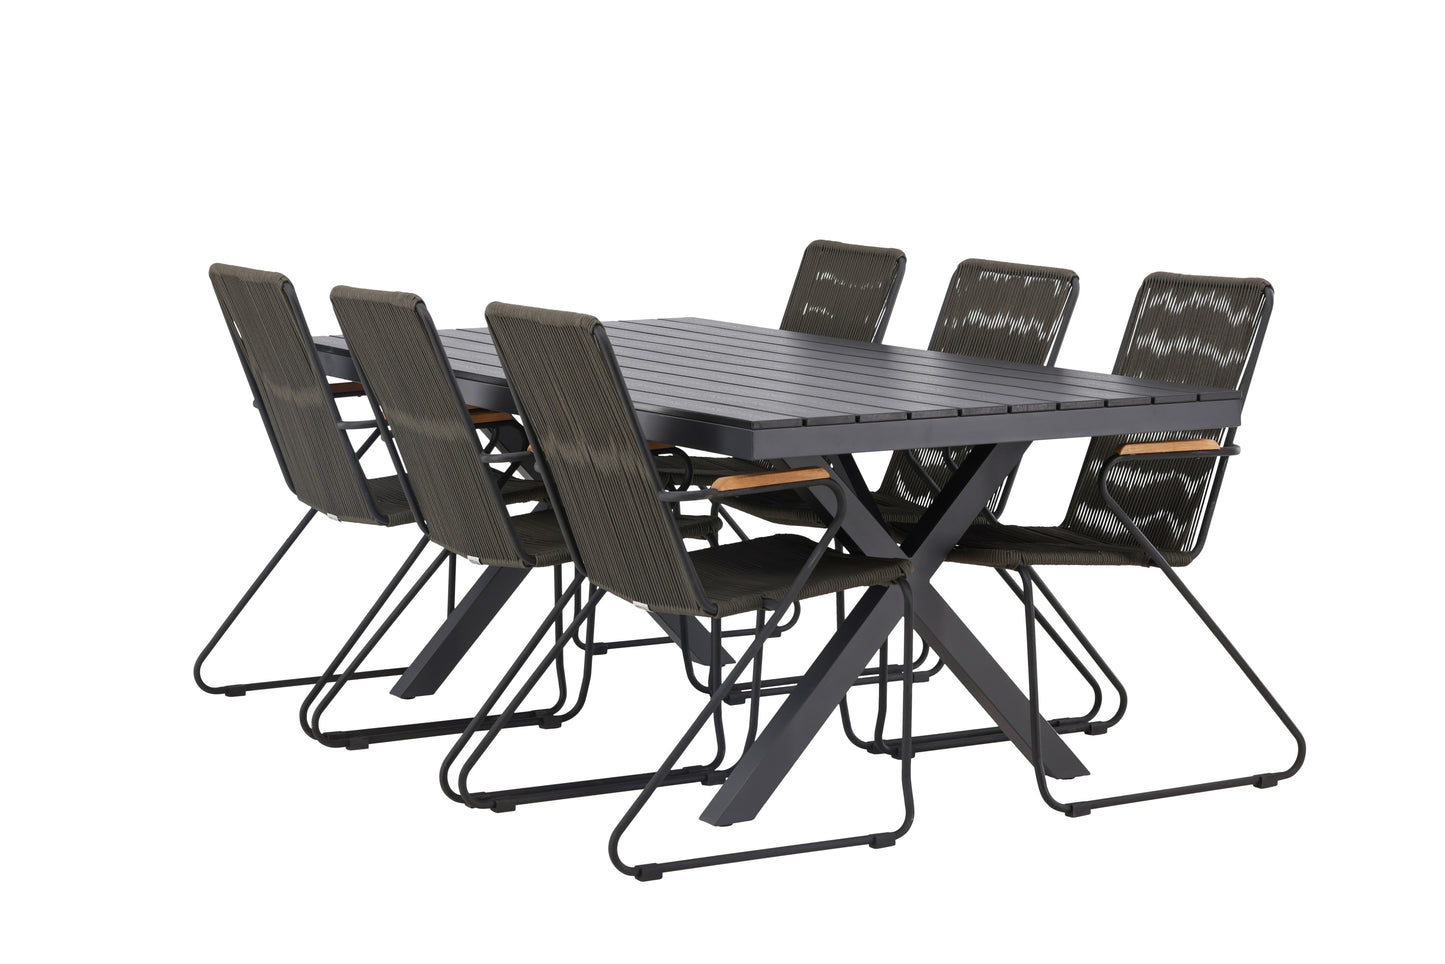 Garcia - Spisebord, Aluminium - Sort / Rektangulær 100*200* + Bois stol Stål - Sort / Mørkegråt Reb